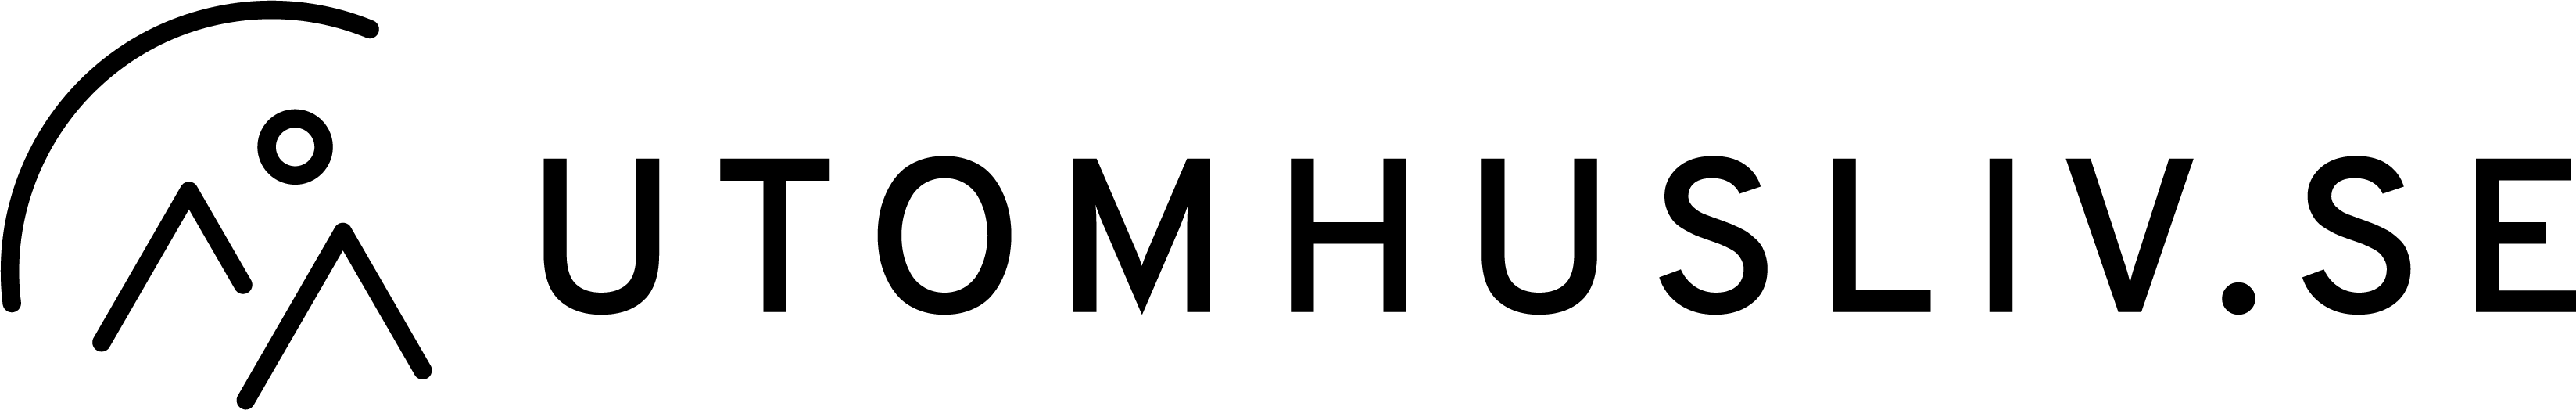 Utomhusliv logo